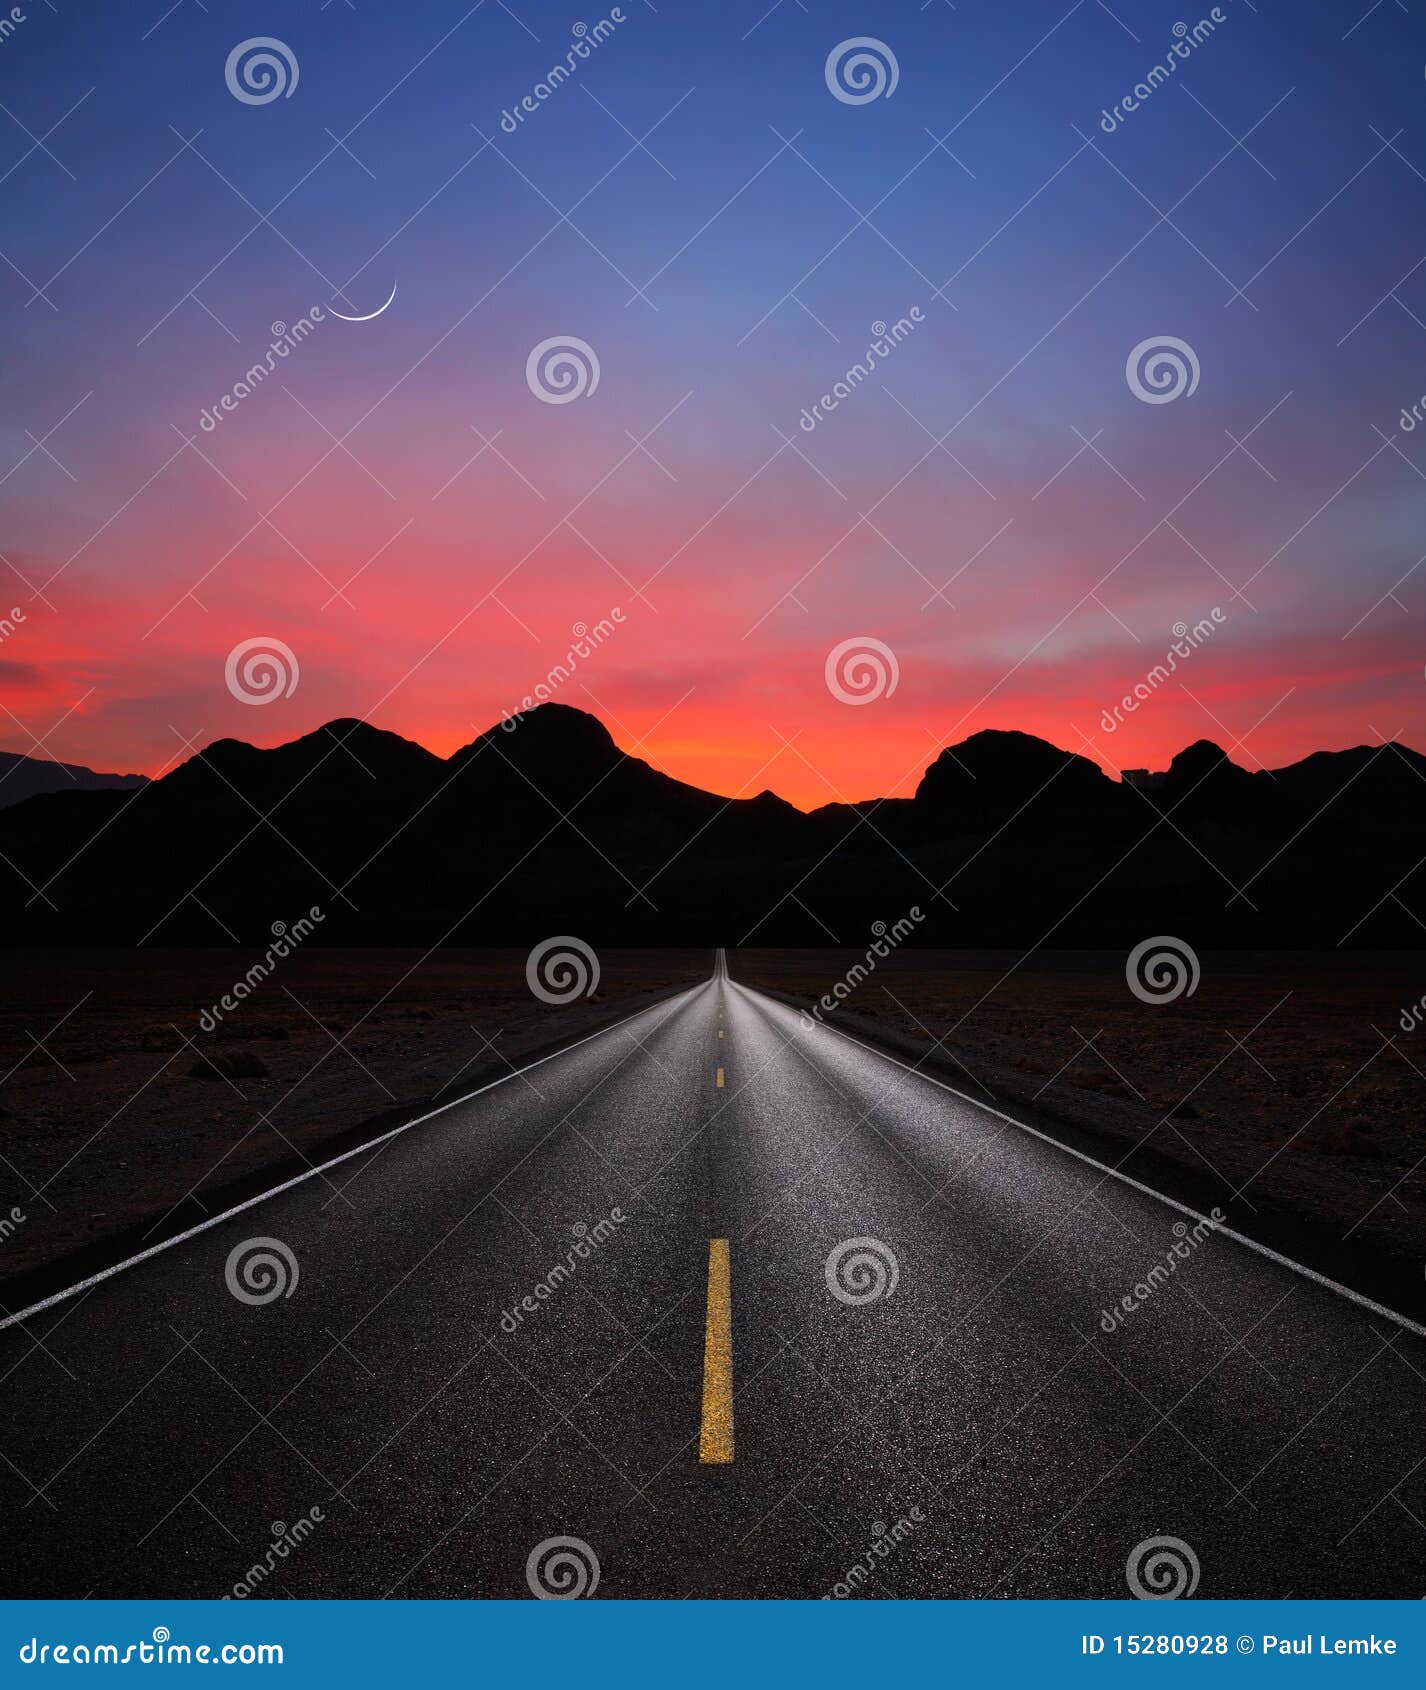 sunrise highway